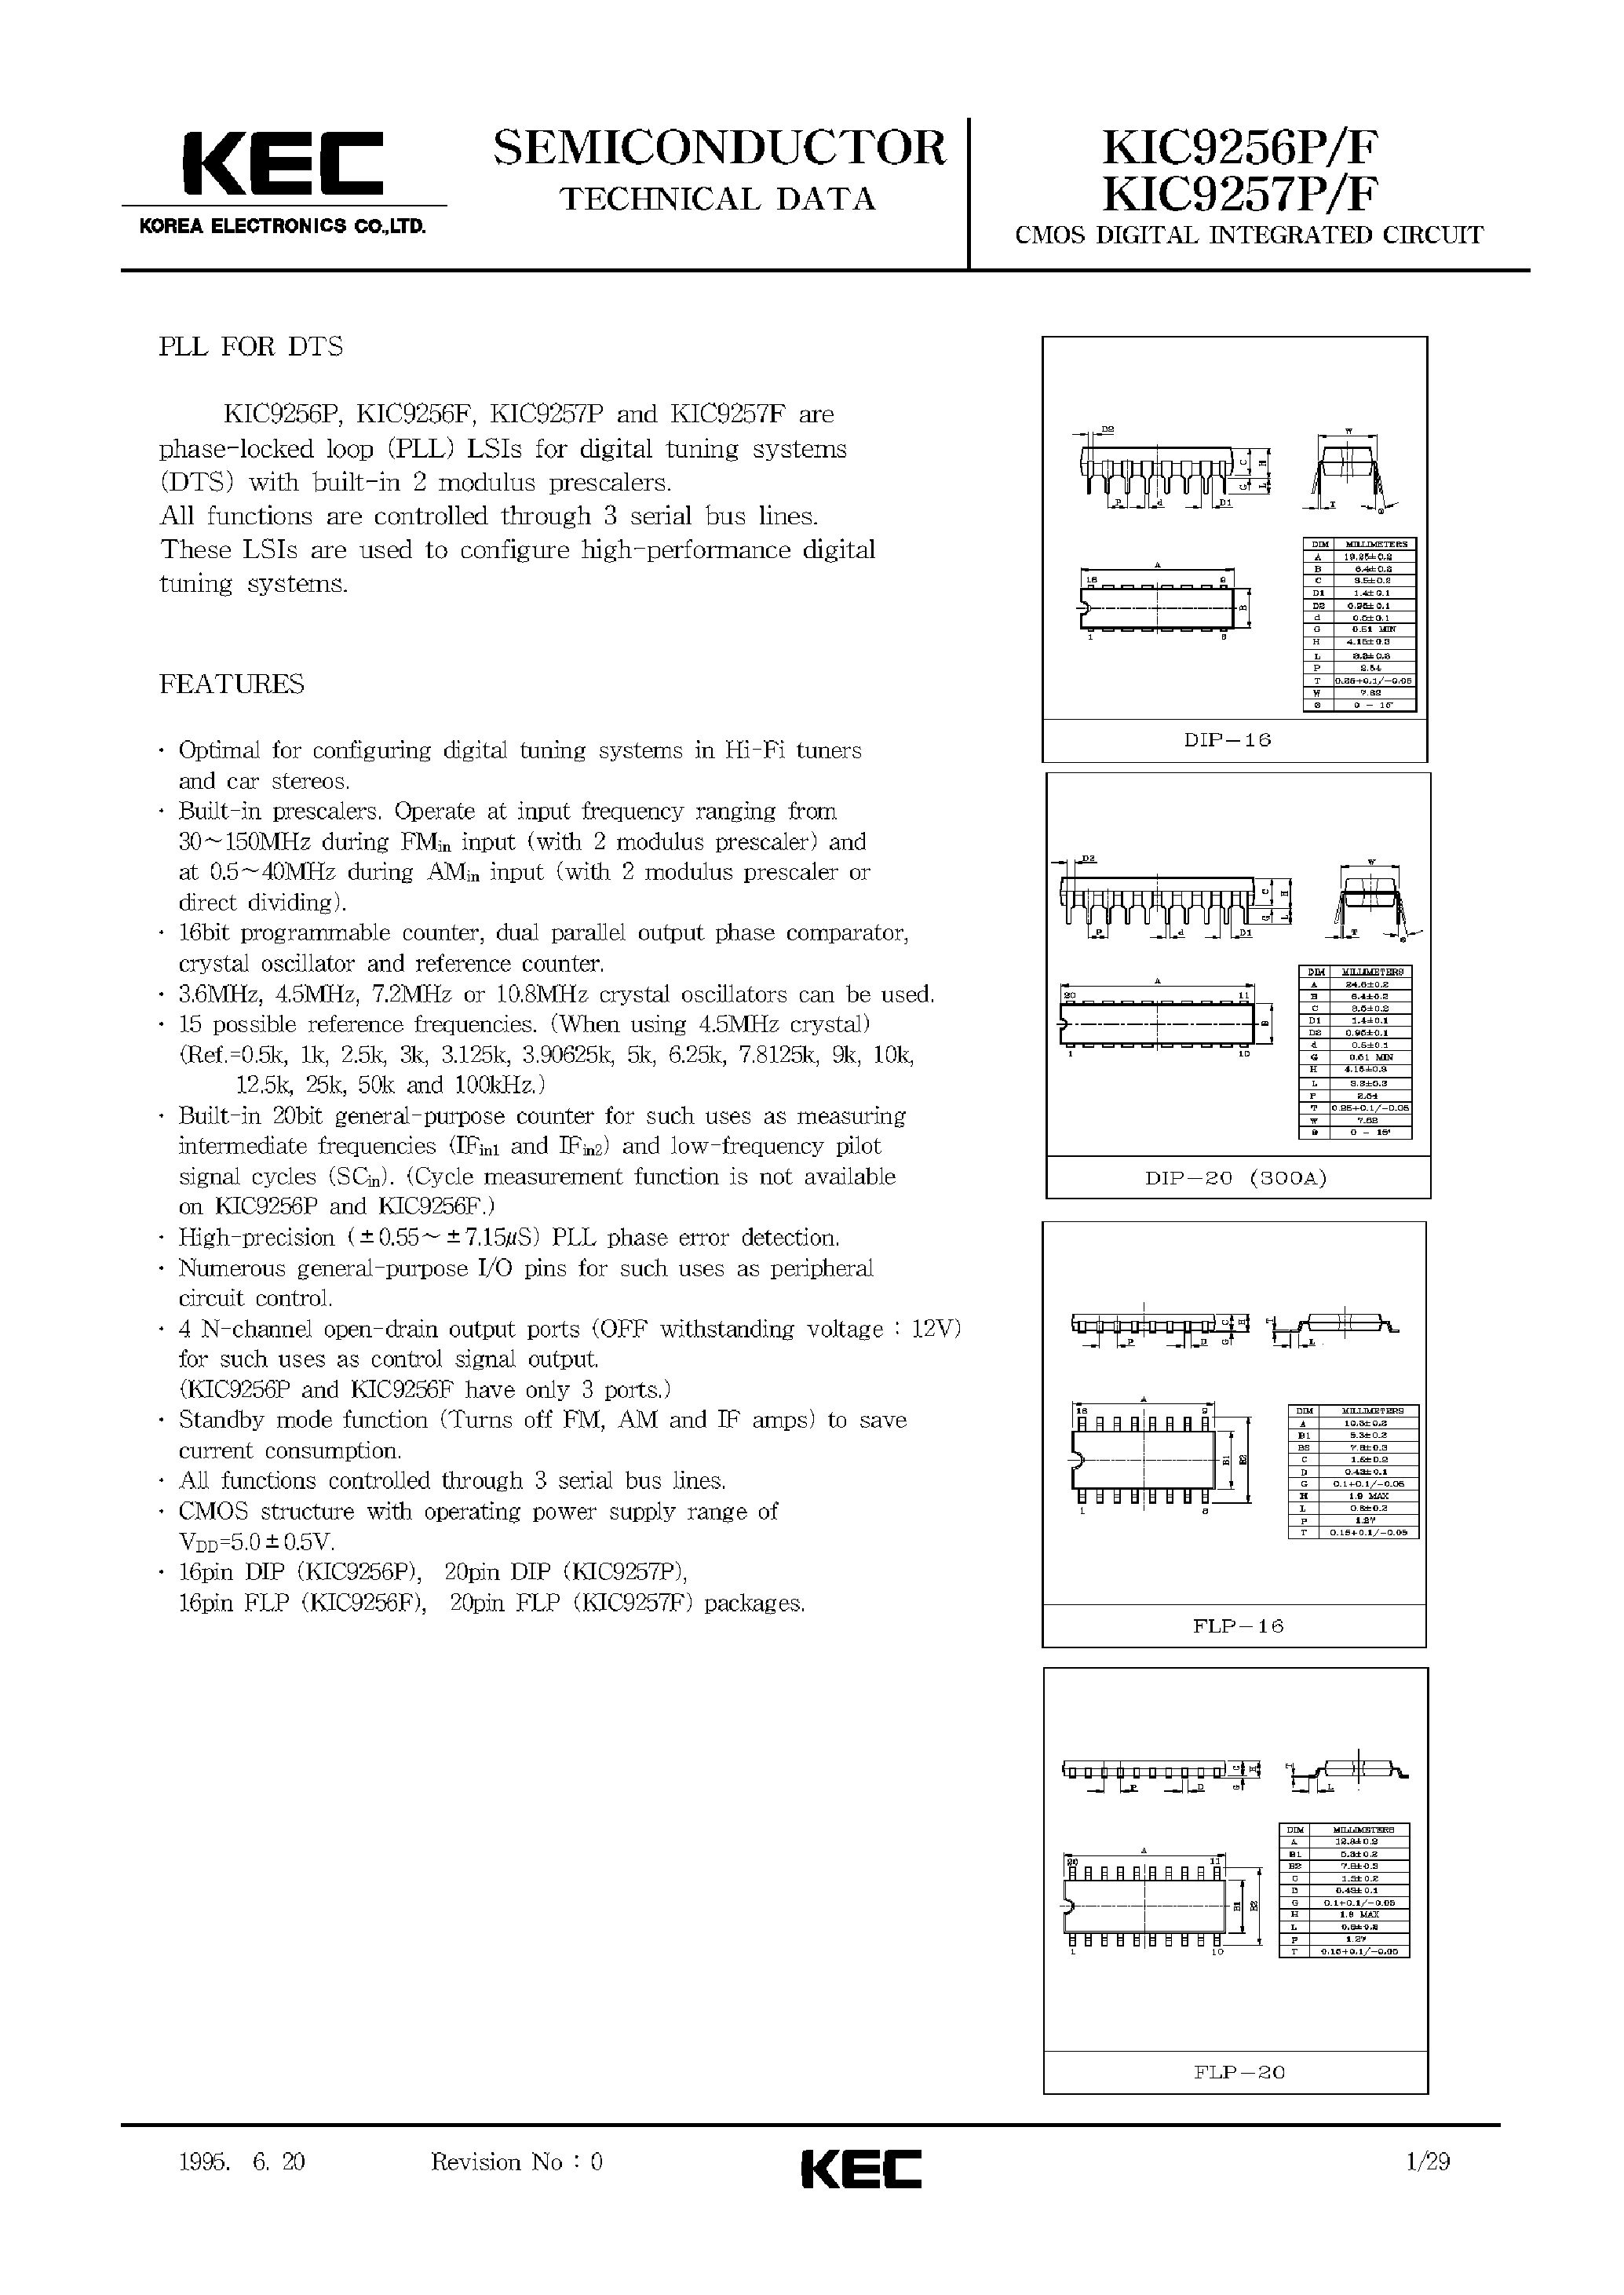 Datasheet KIC9256 - SEMICONDUCTOR TECHNICAL DATA page 1